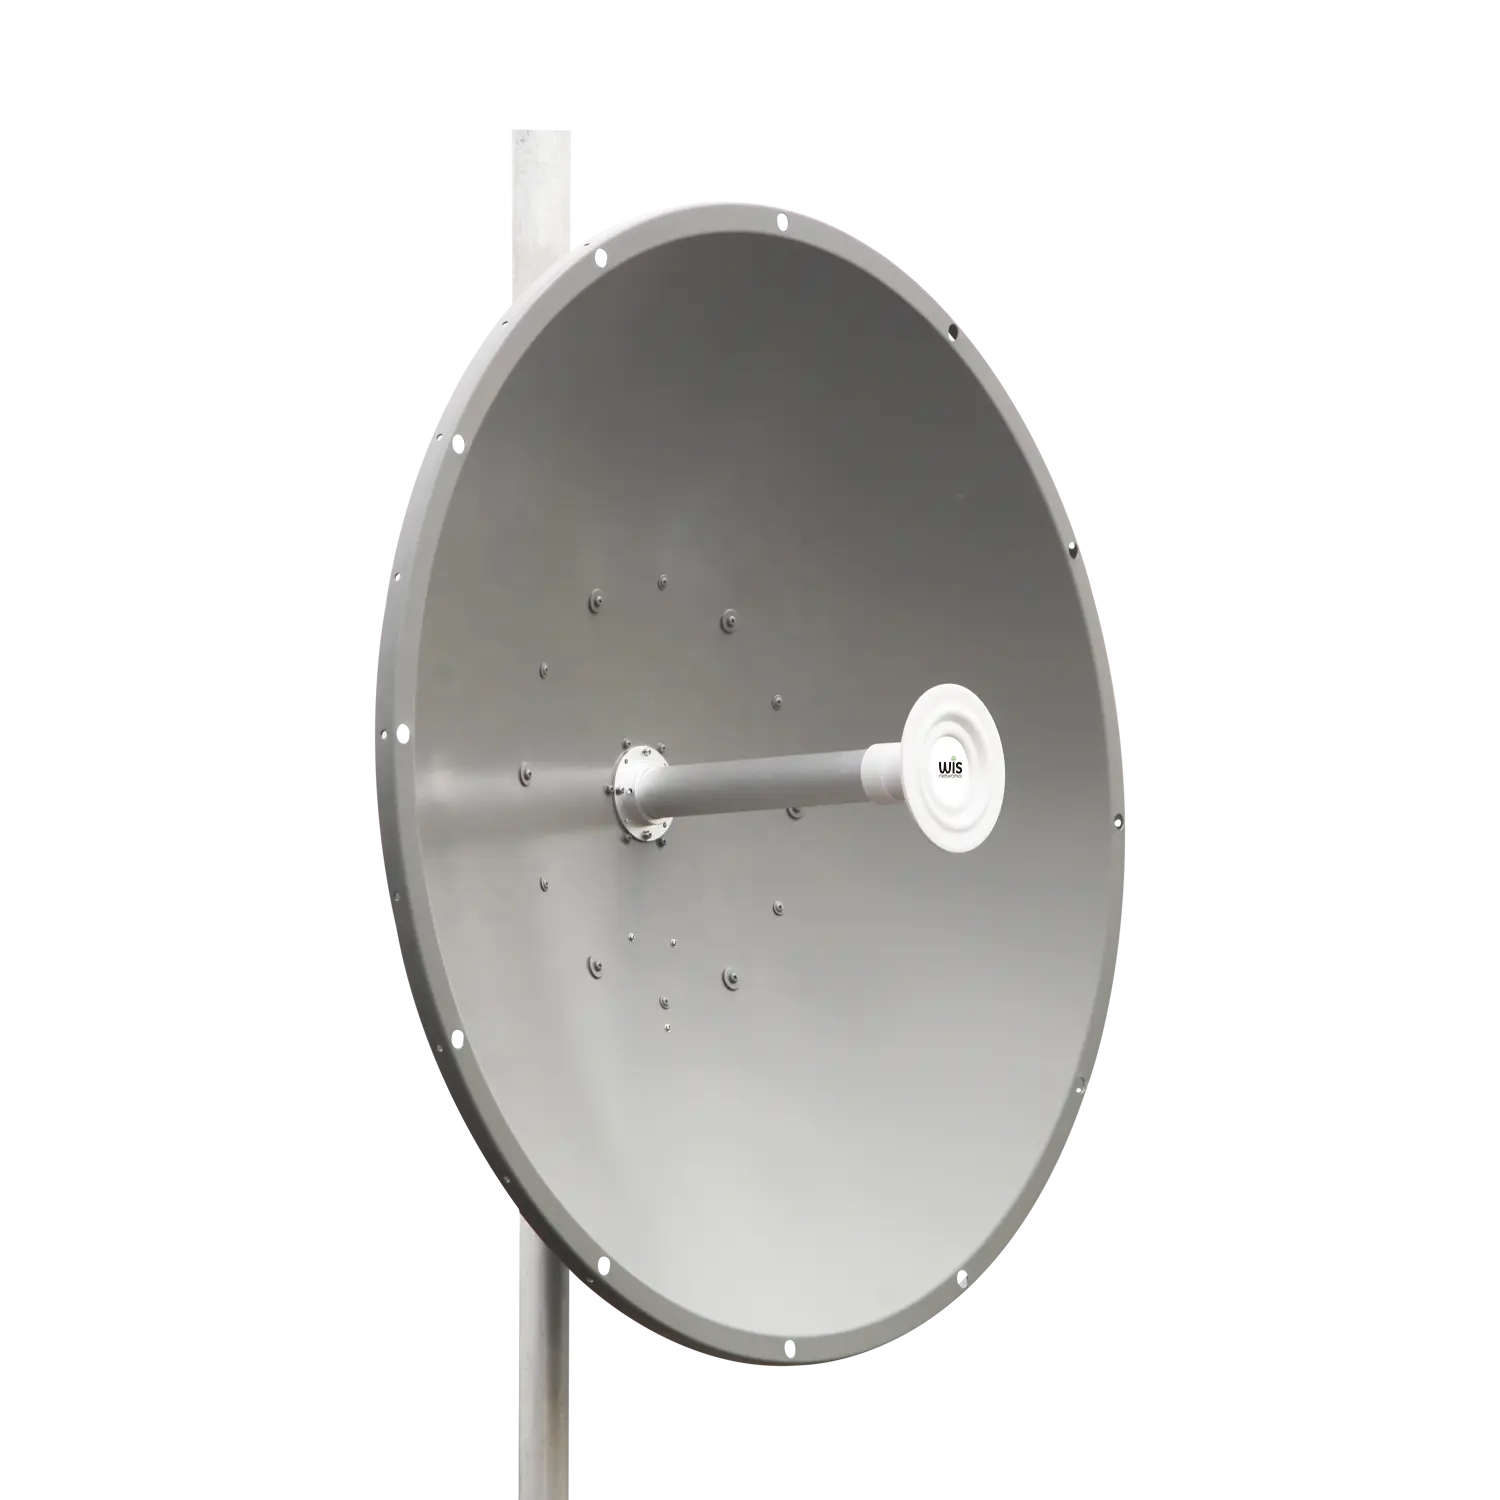 Antena Hidangan Mimi 0.9M 34dBi, untuk Ubnt Rocket M5 dan Ac WIS NETWORKS Jirous